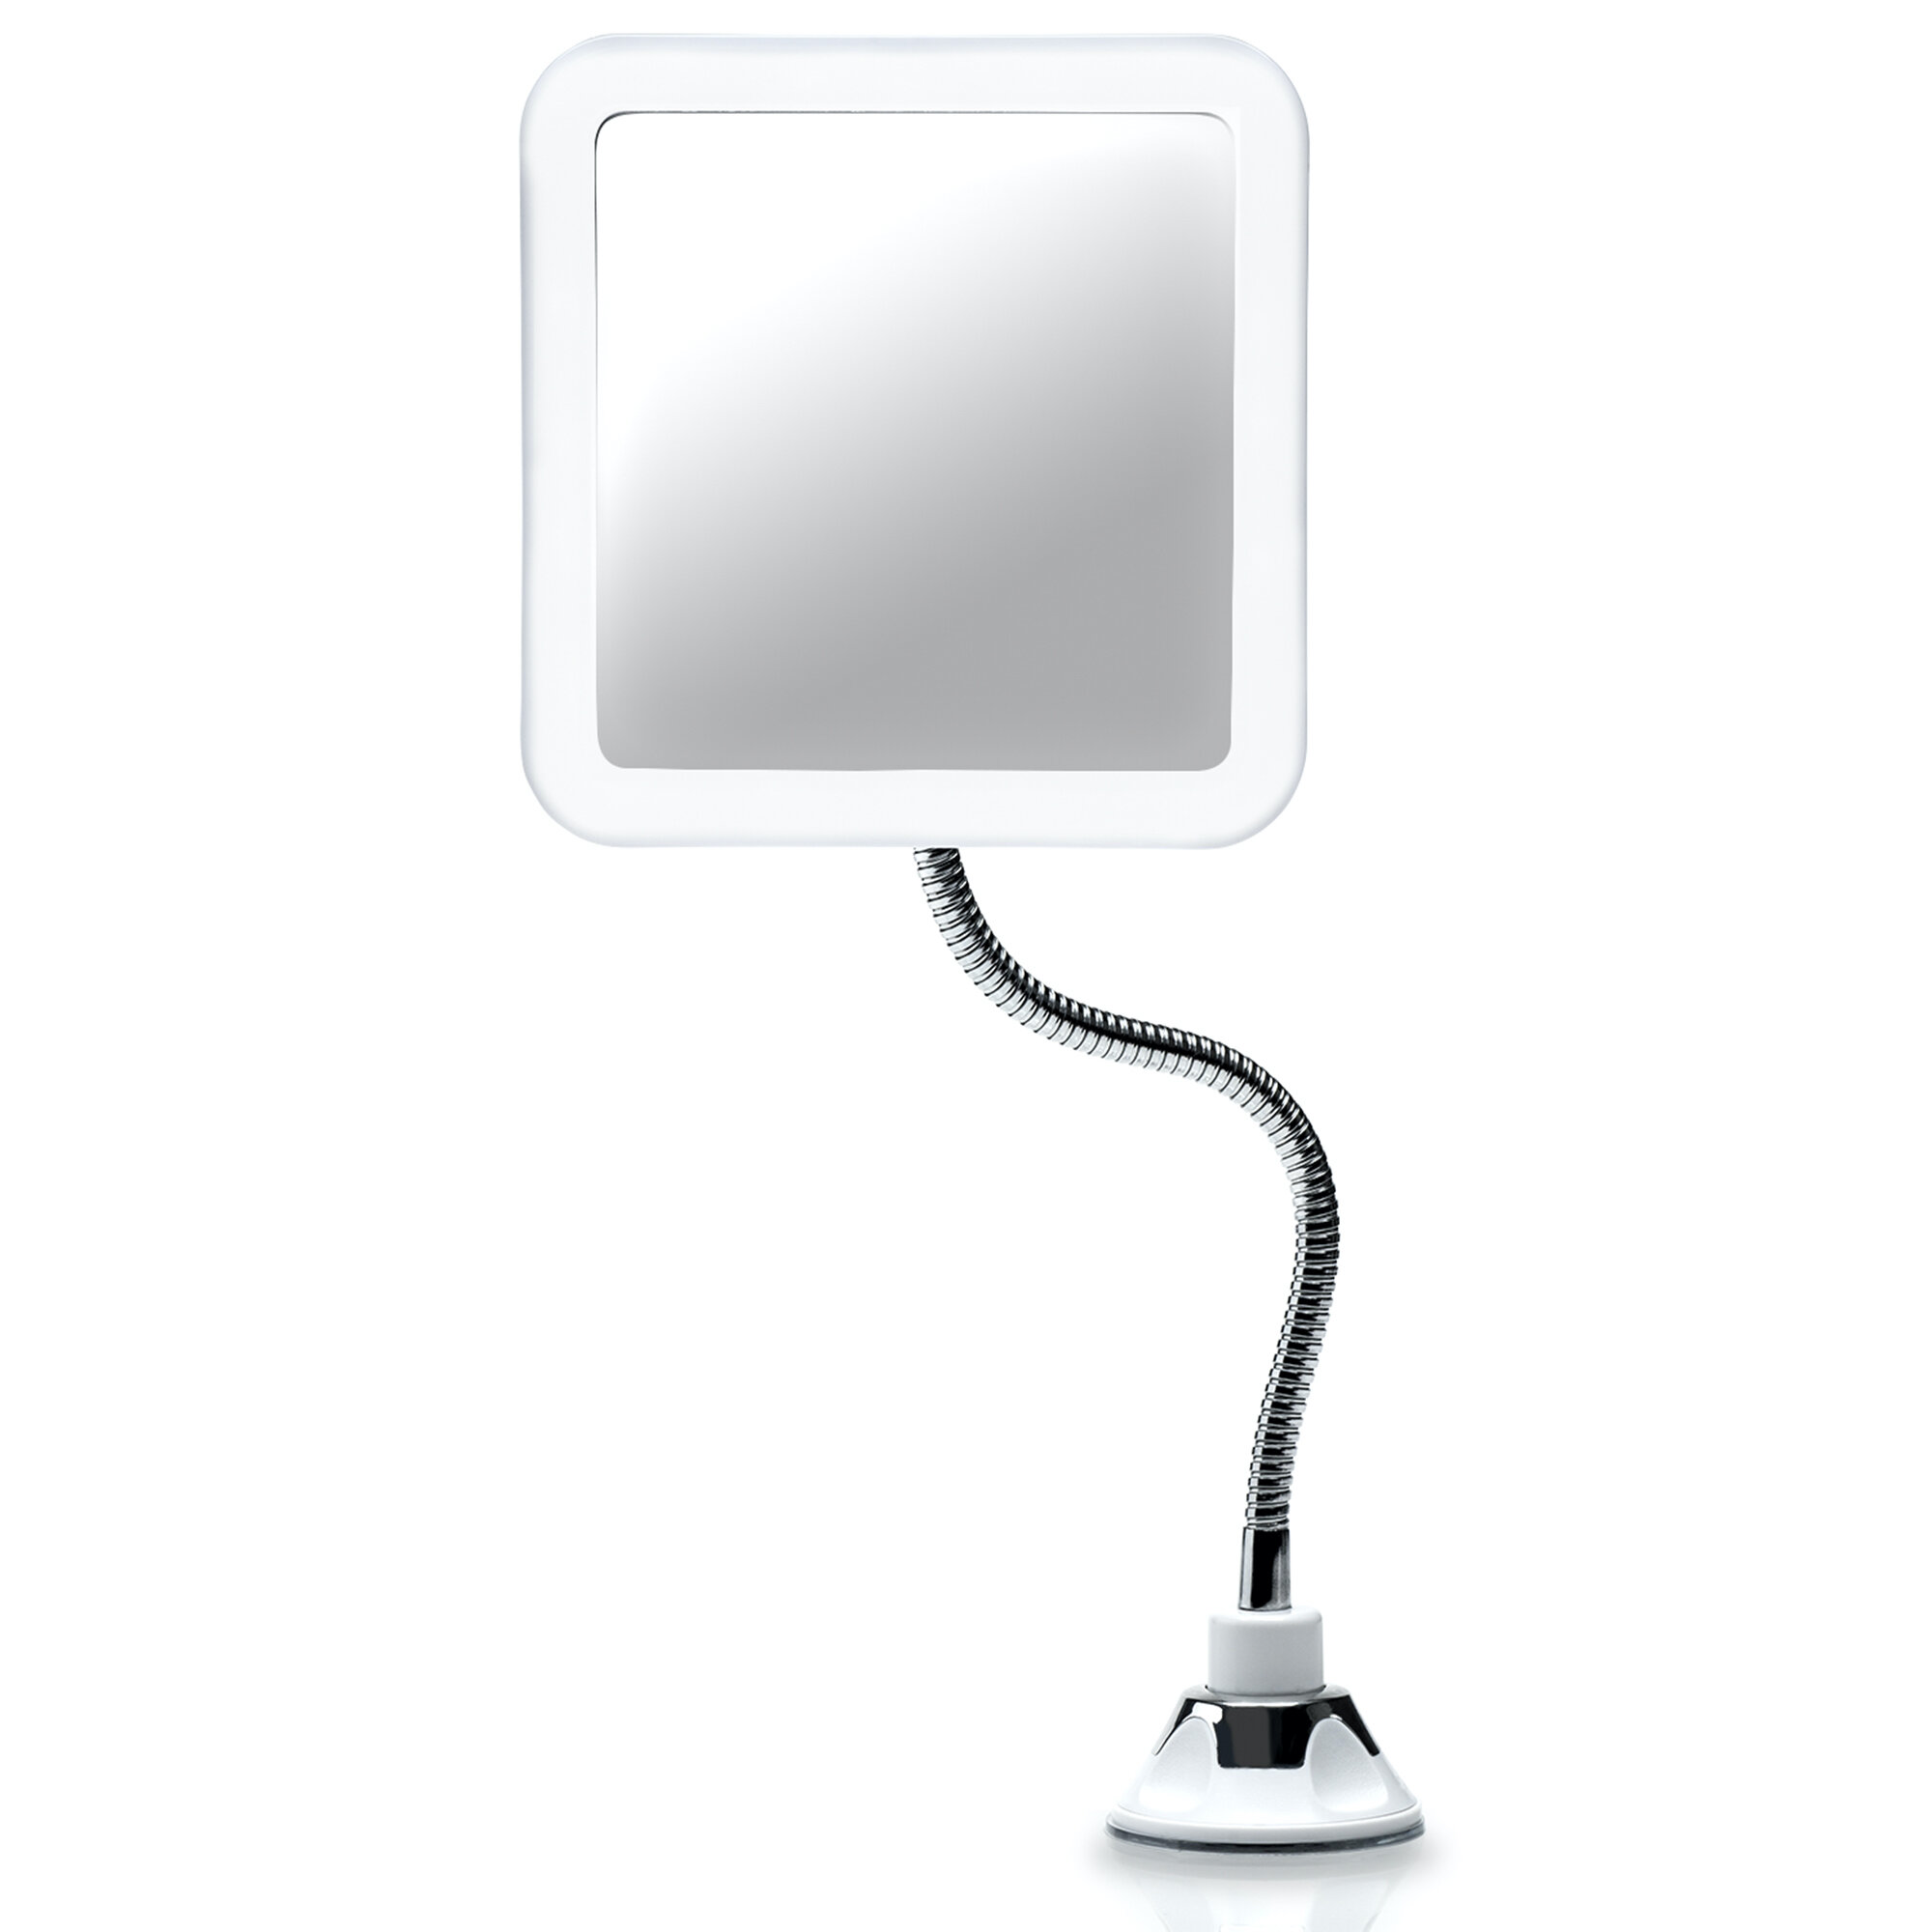  Fancii LED Lighted Travel Makeup Mirror, 1x/10x